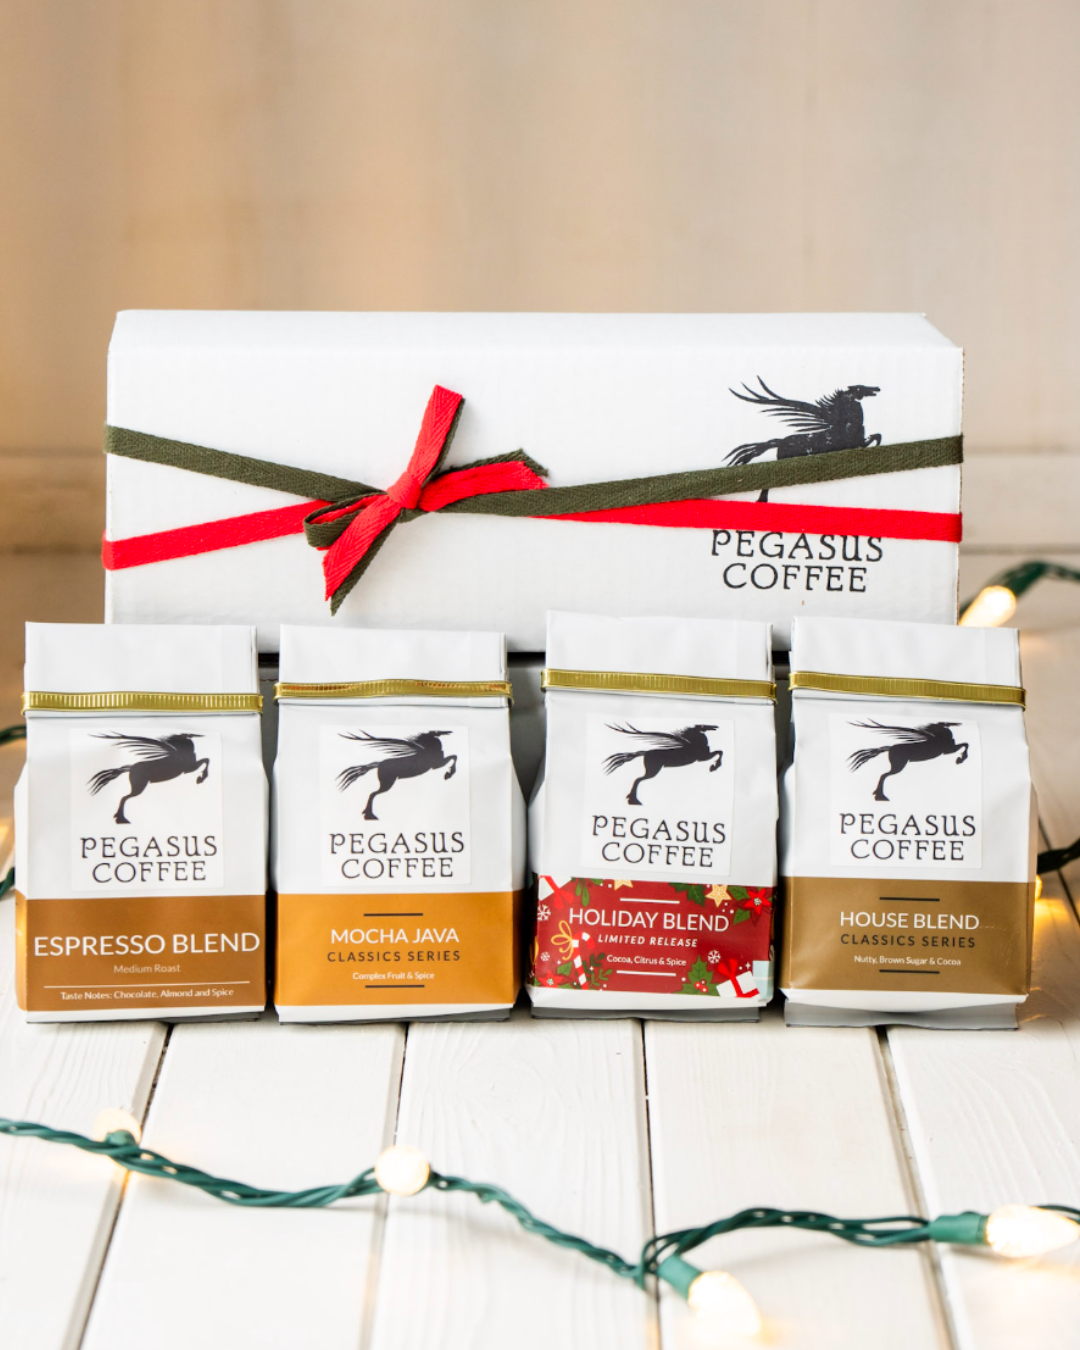 Pegasus Coffee Sampler Set, Espresso Blend, Mocha Java, Holiday Blend, and House Blend in front of gift box